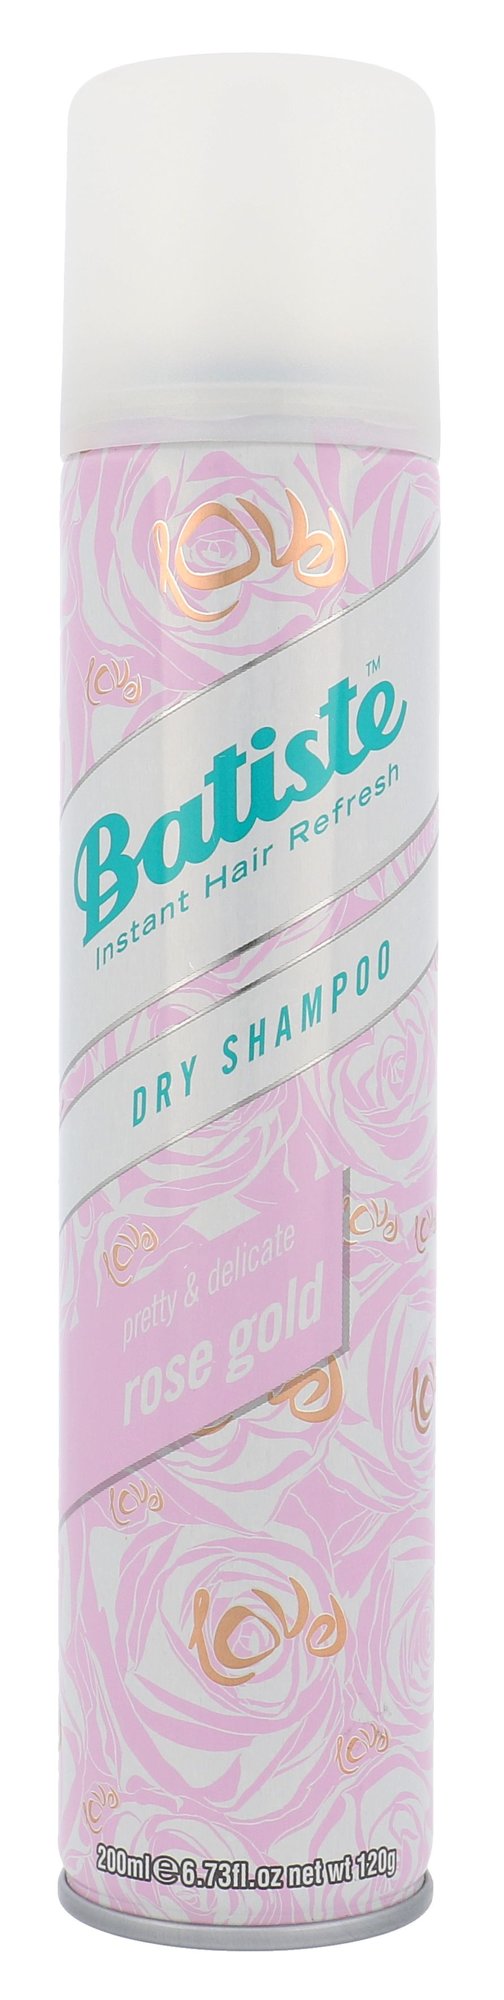 Batiste Dry Shampoo Rose Gold